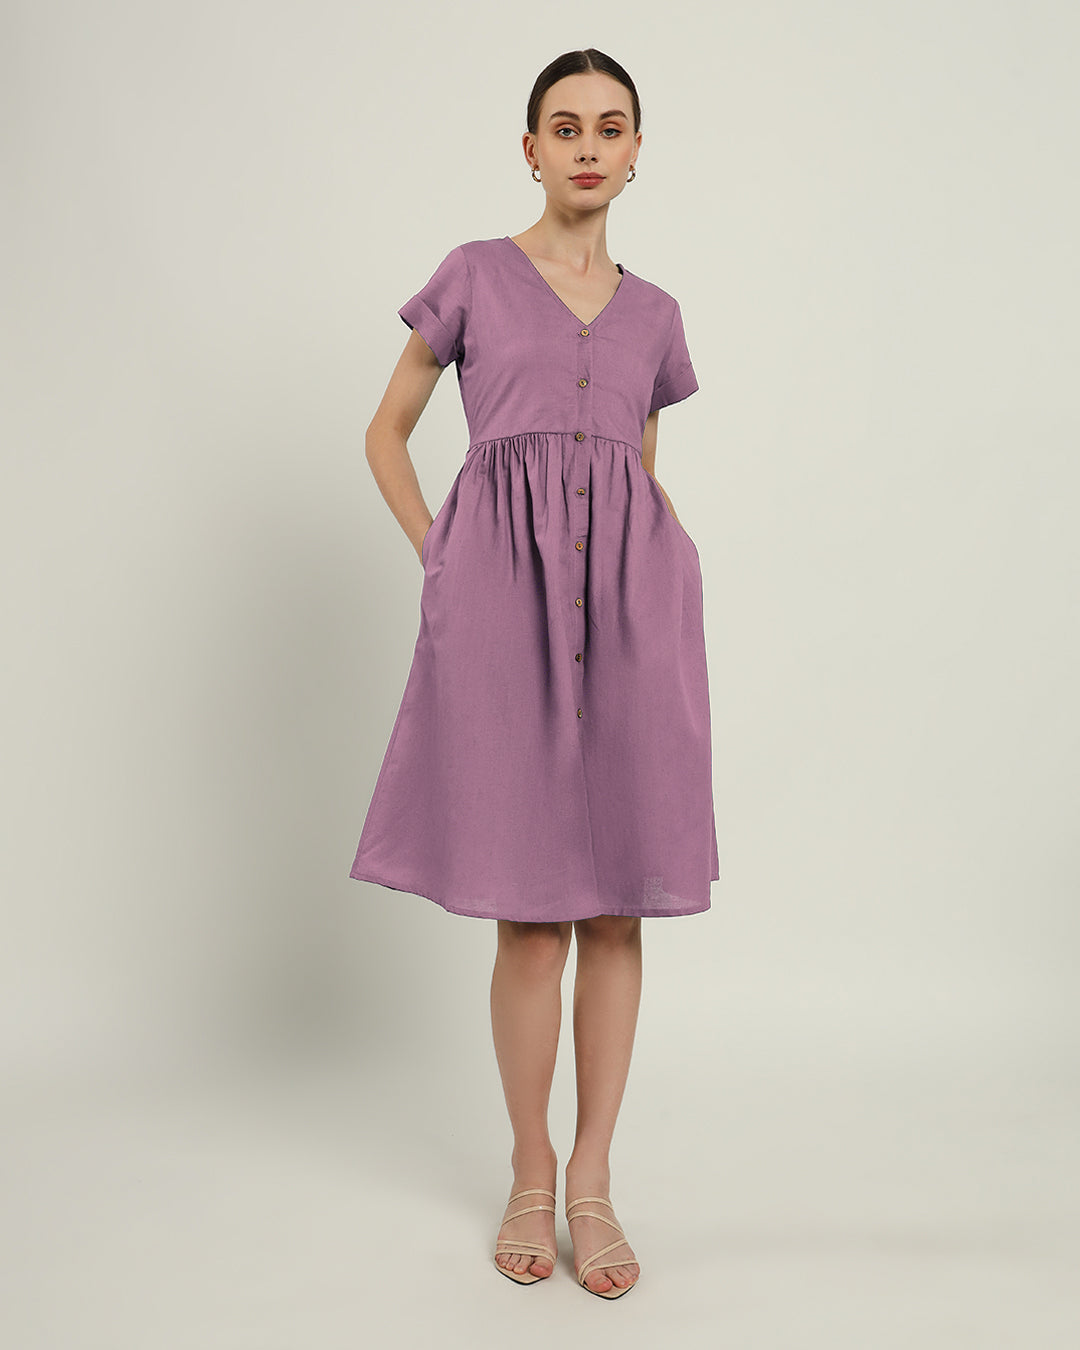 The Valence Purple Swirl Dress